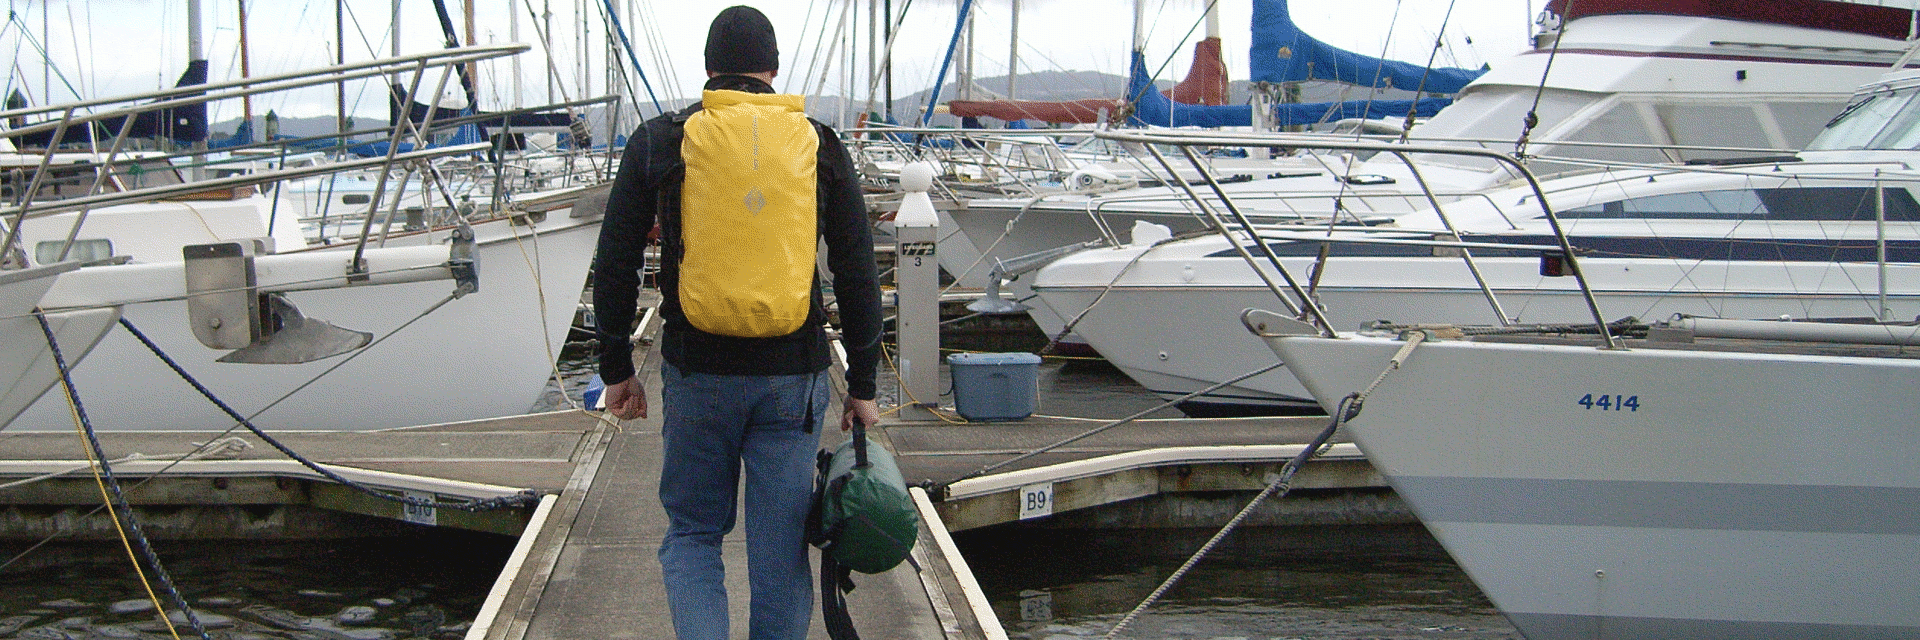 mariner dry bags in yacht marina